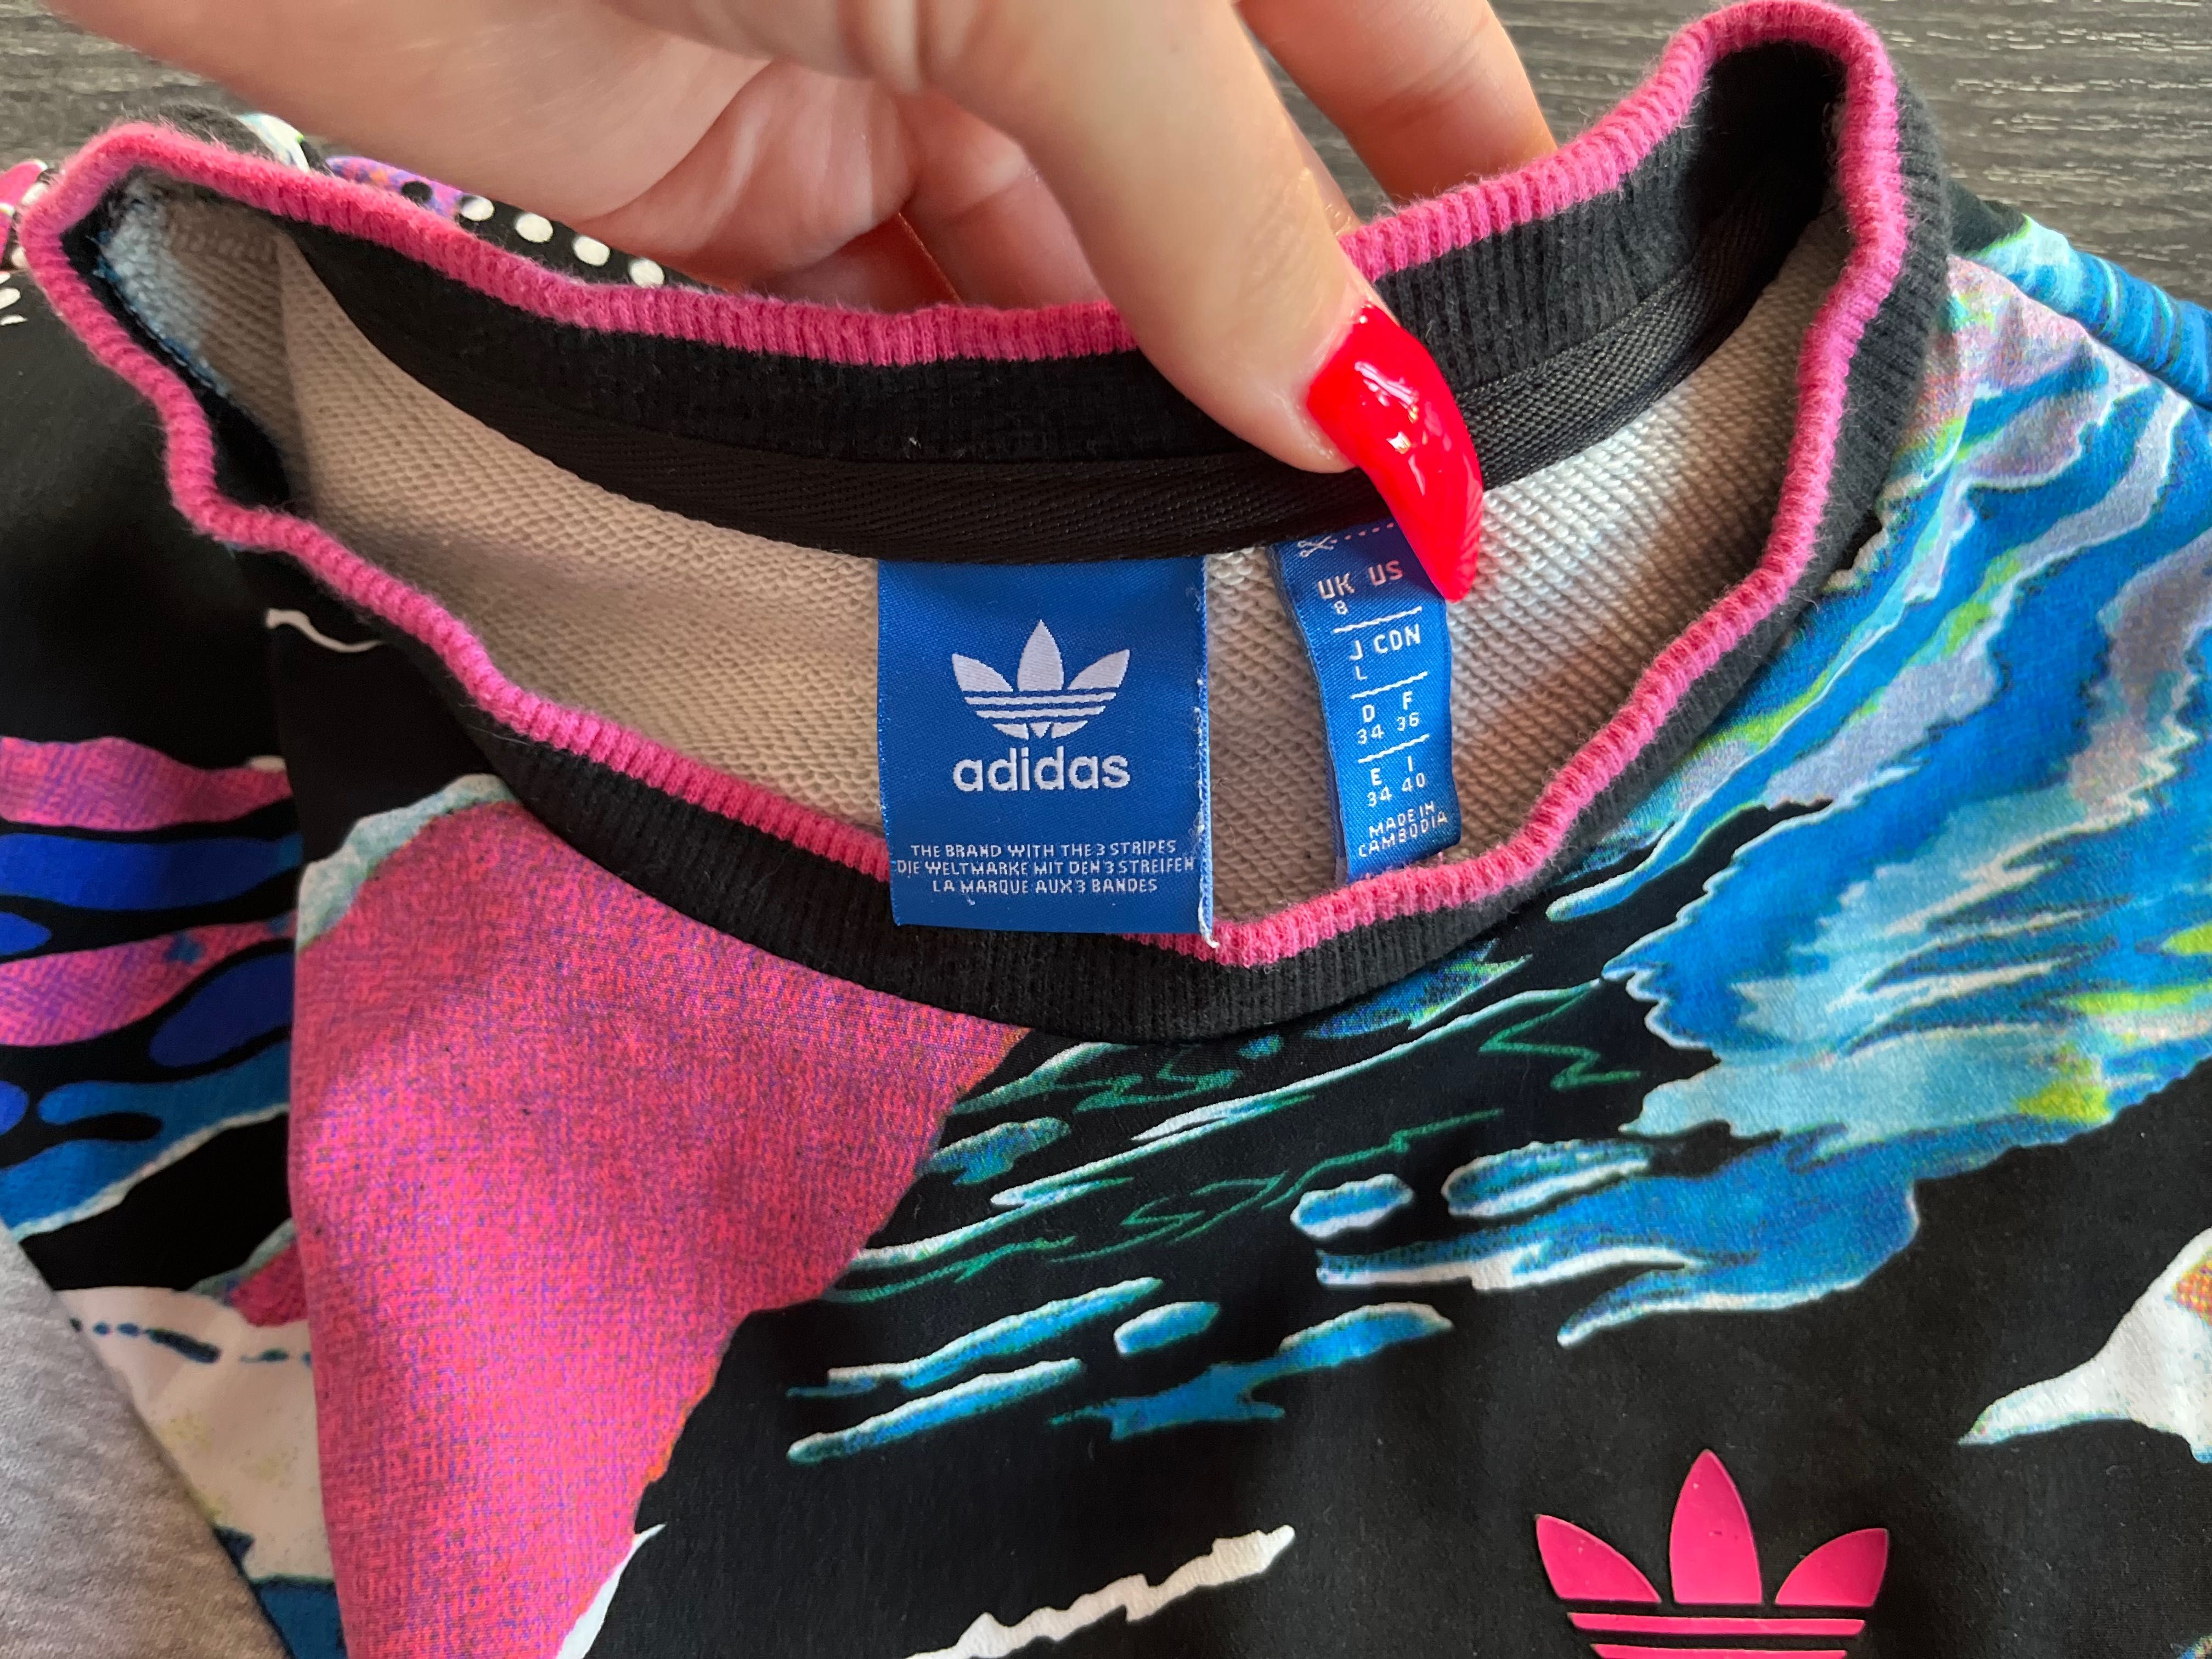 Adidas bluza Venice Beach